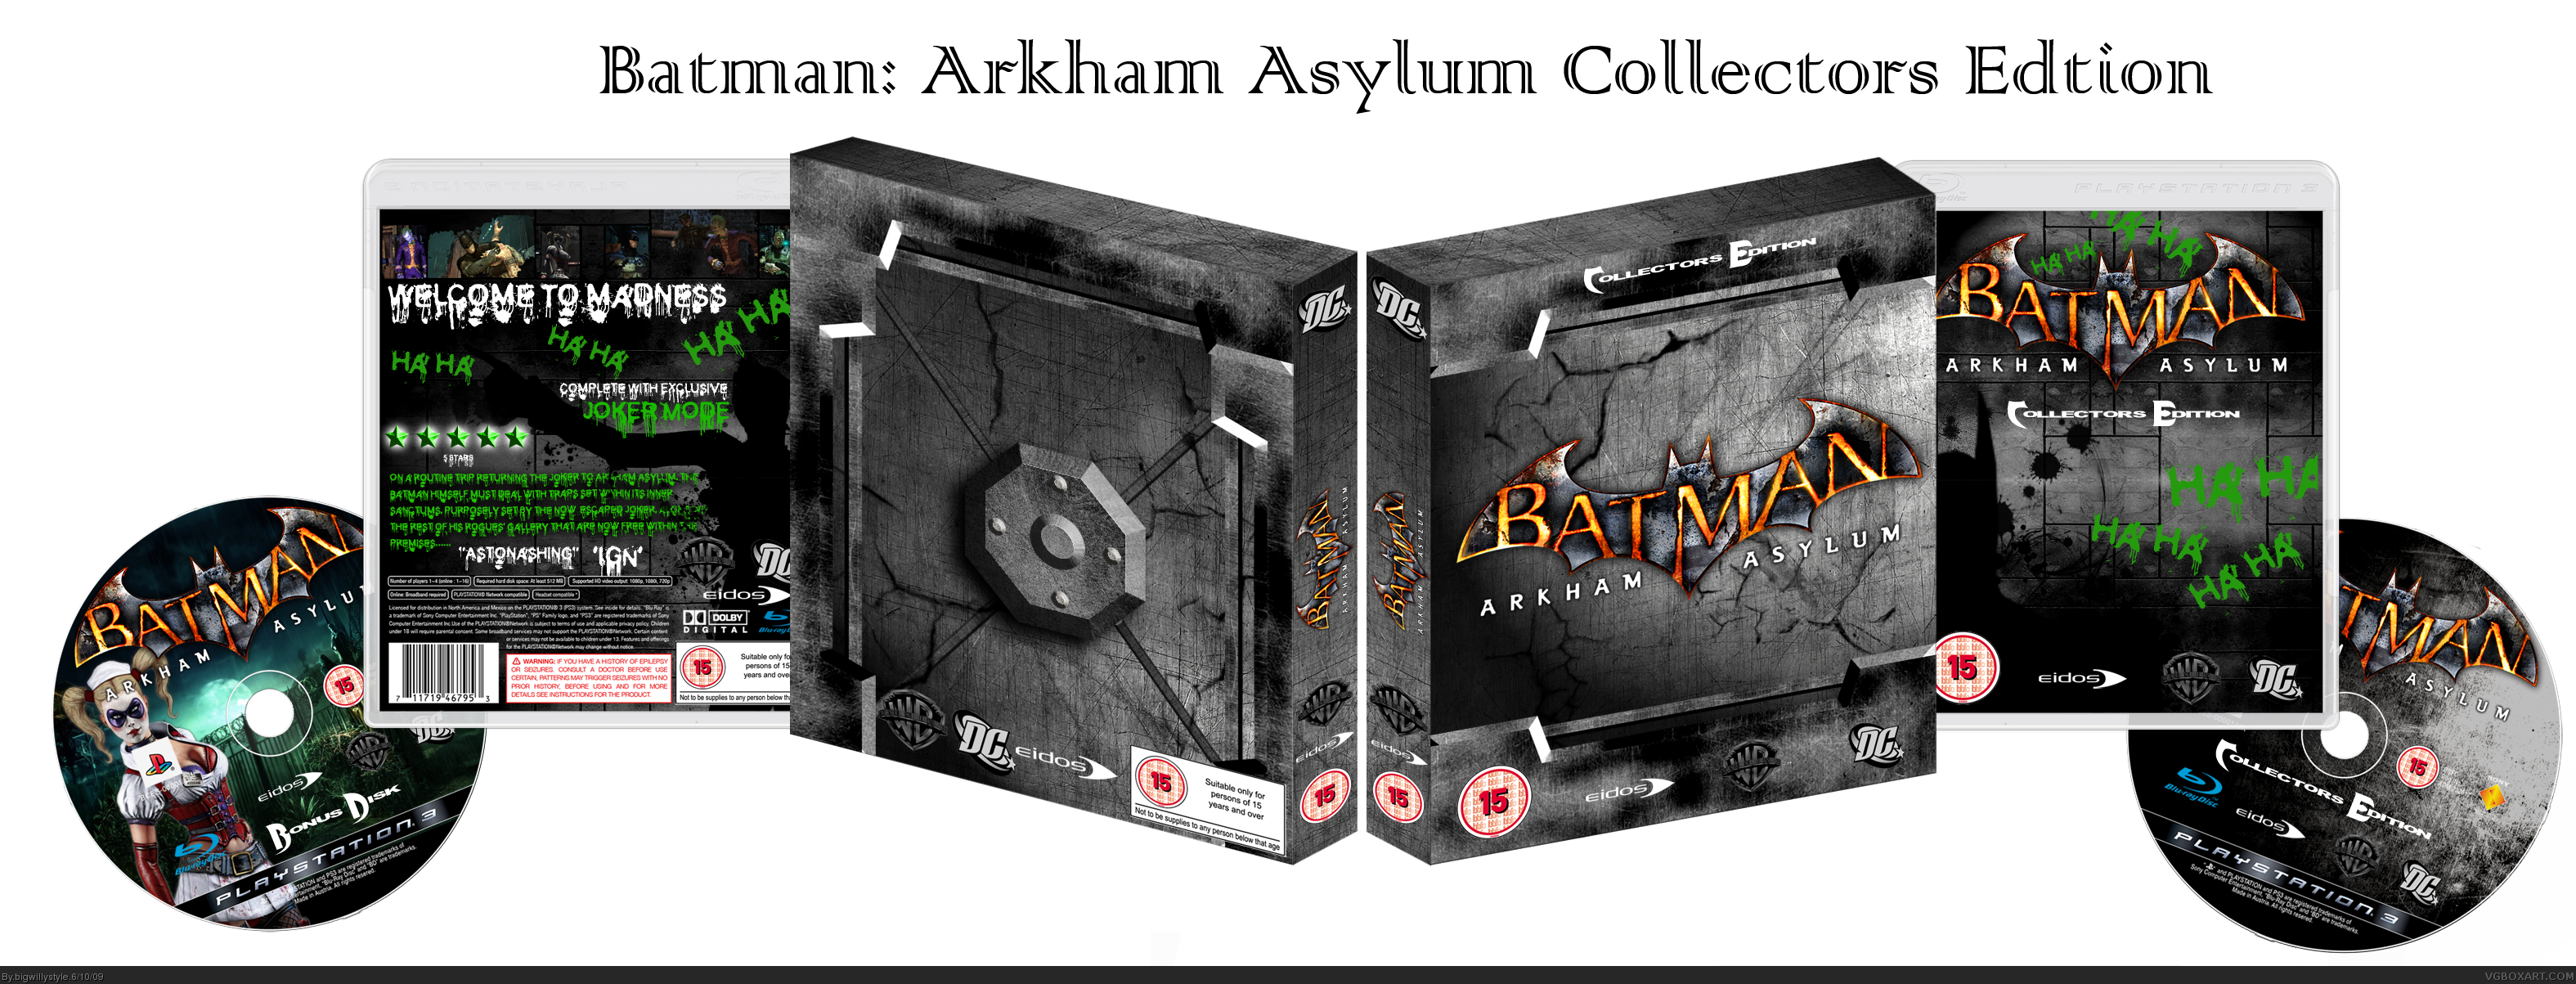 Batman: Arkham Asylum Collector's Edition box cover